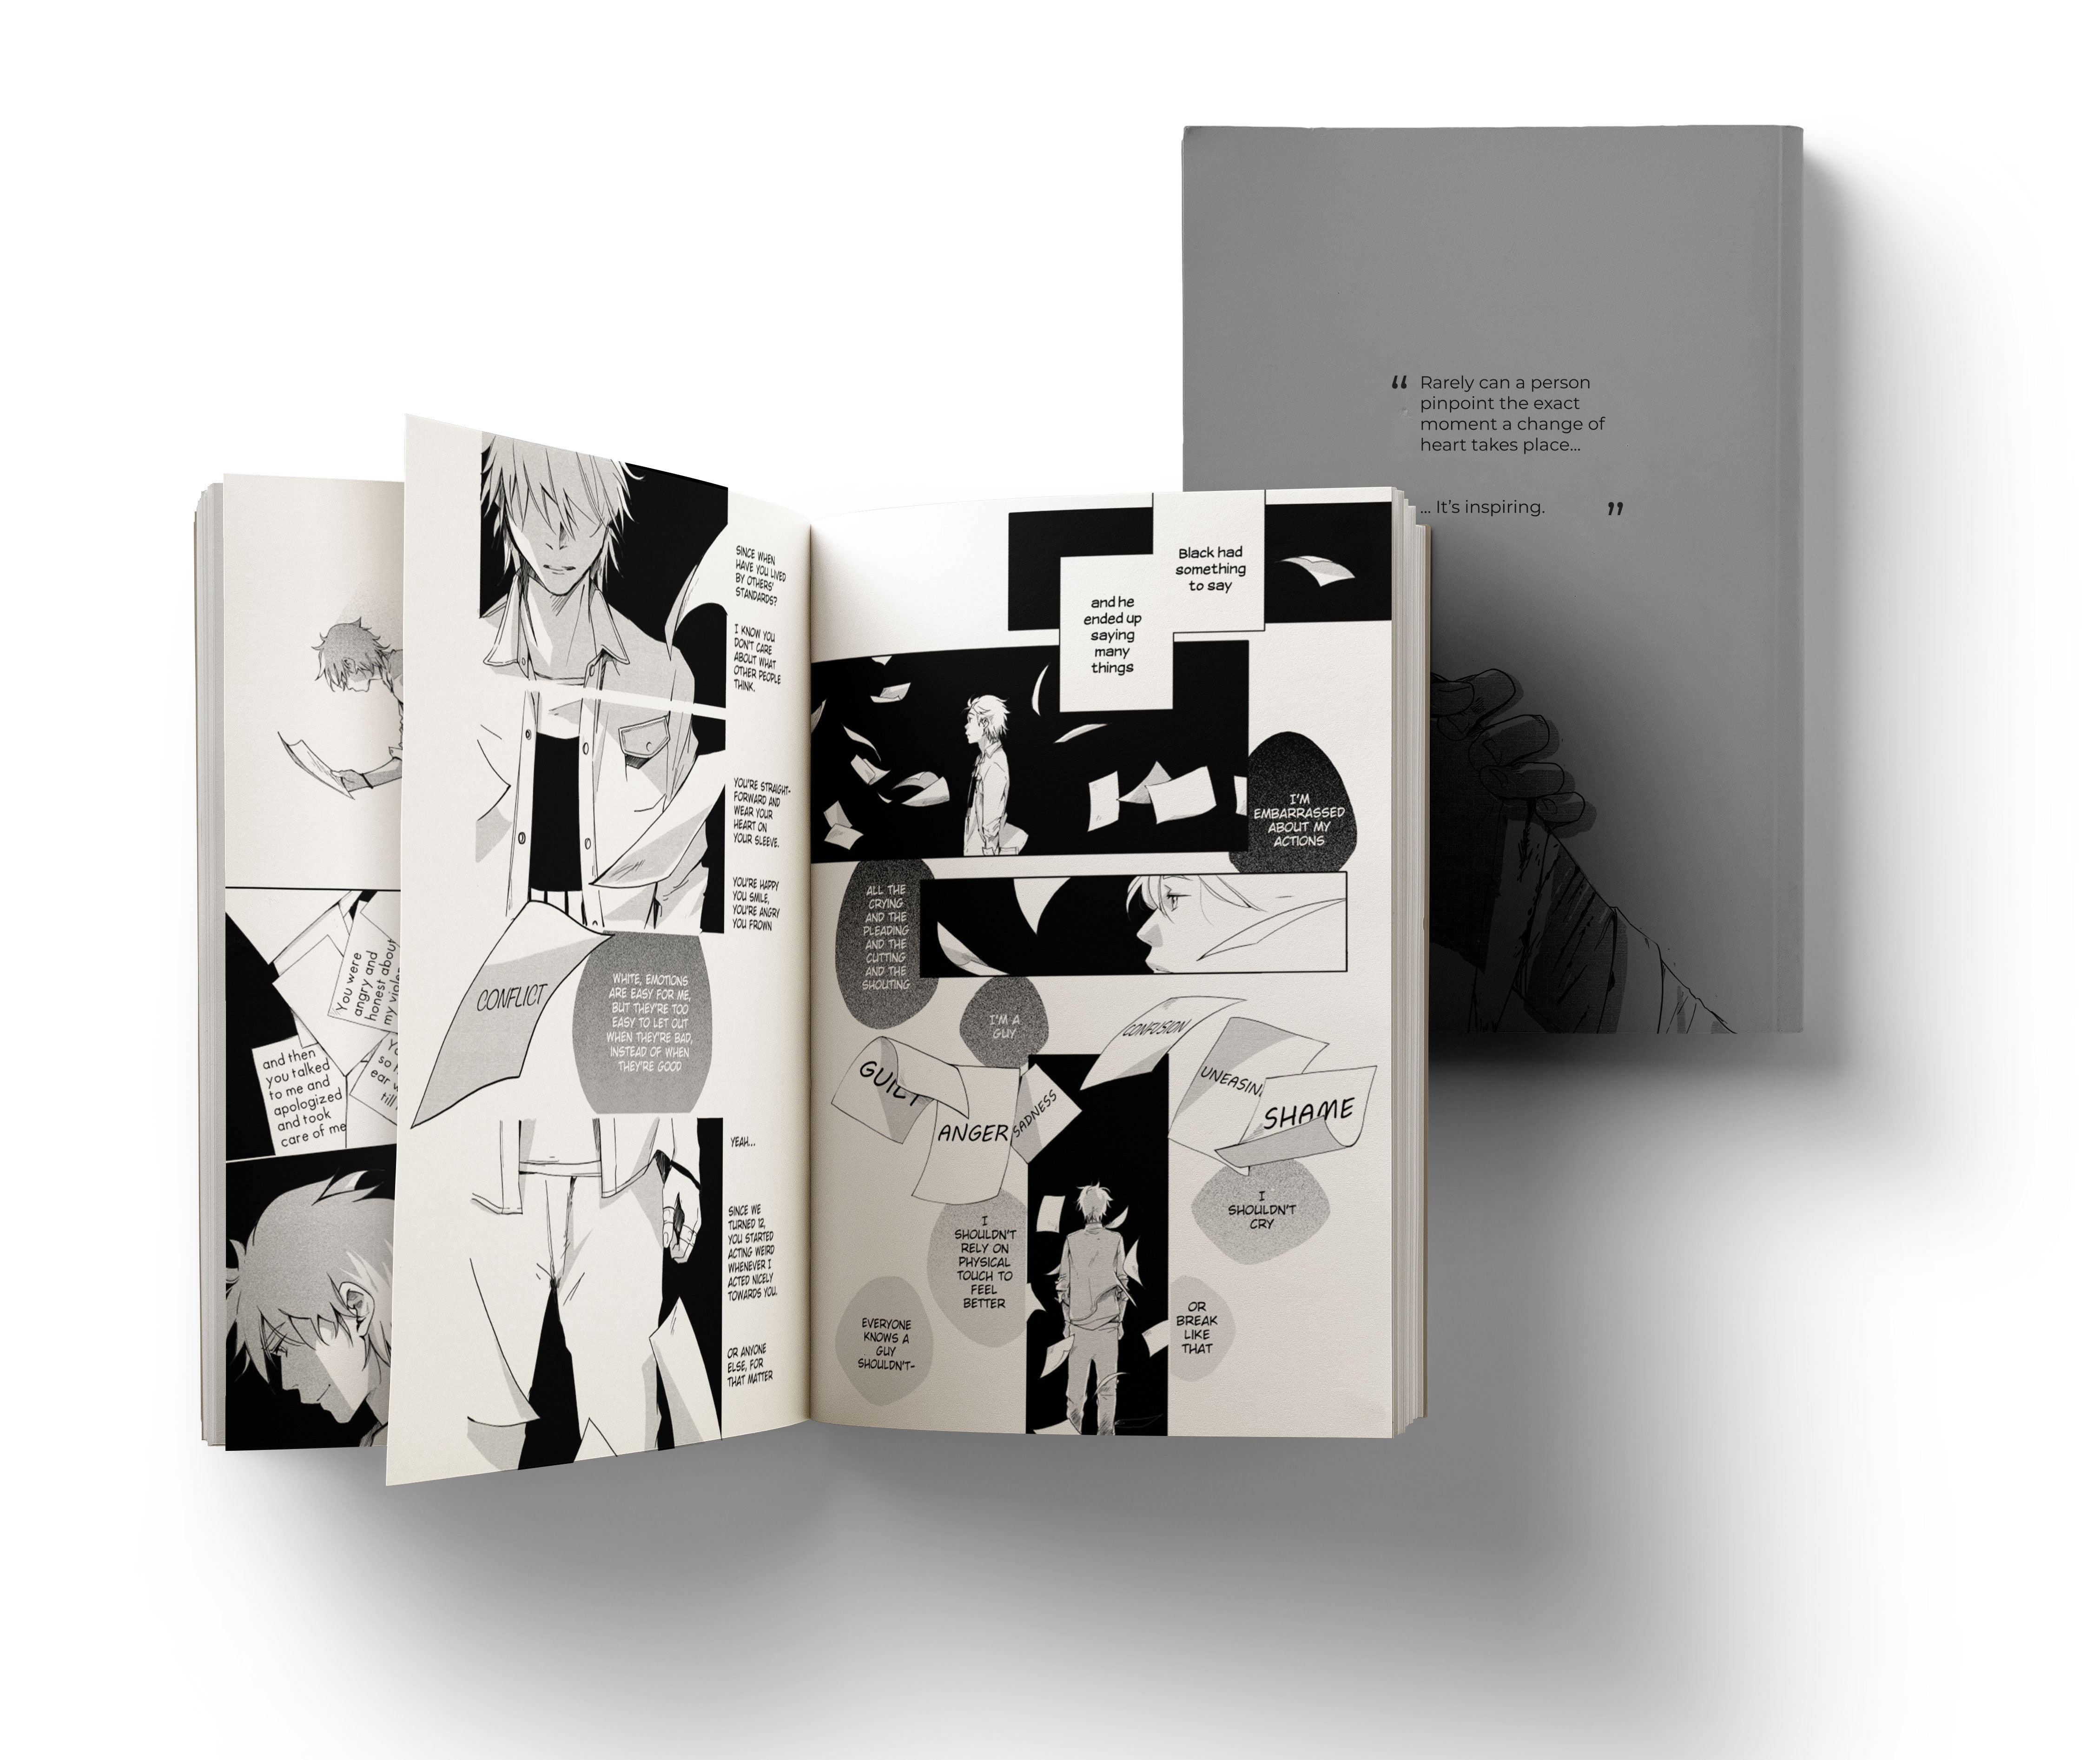 Book] Grey is Box Set 1: Volumes 1-4 – Shop of dee Juusan • Beyond the  Mirage